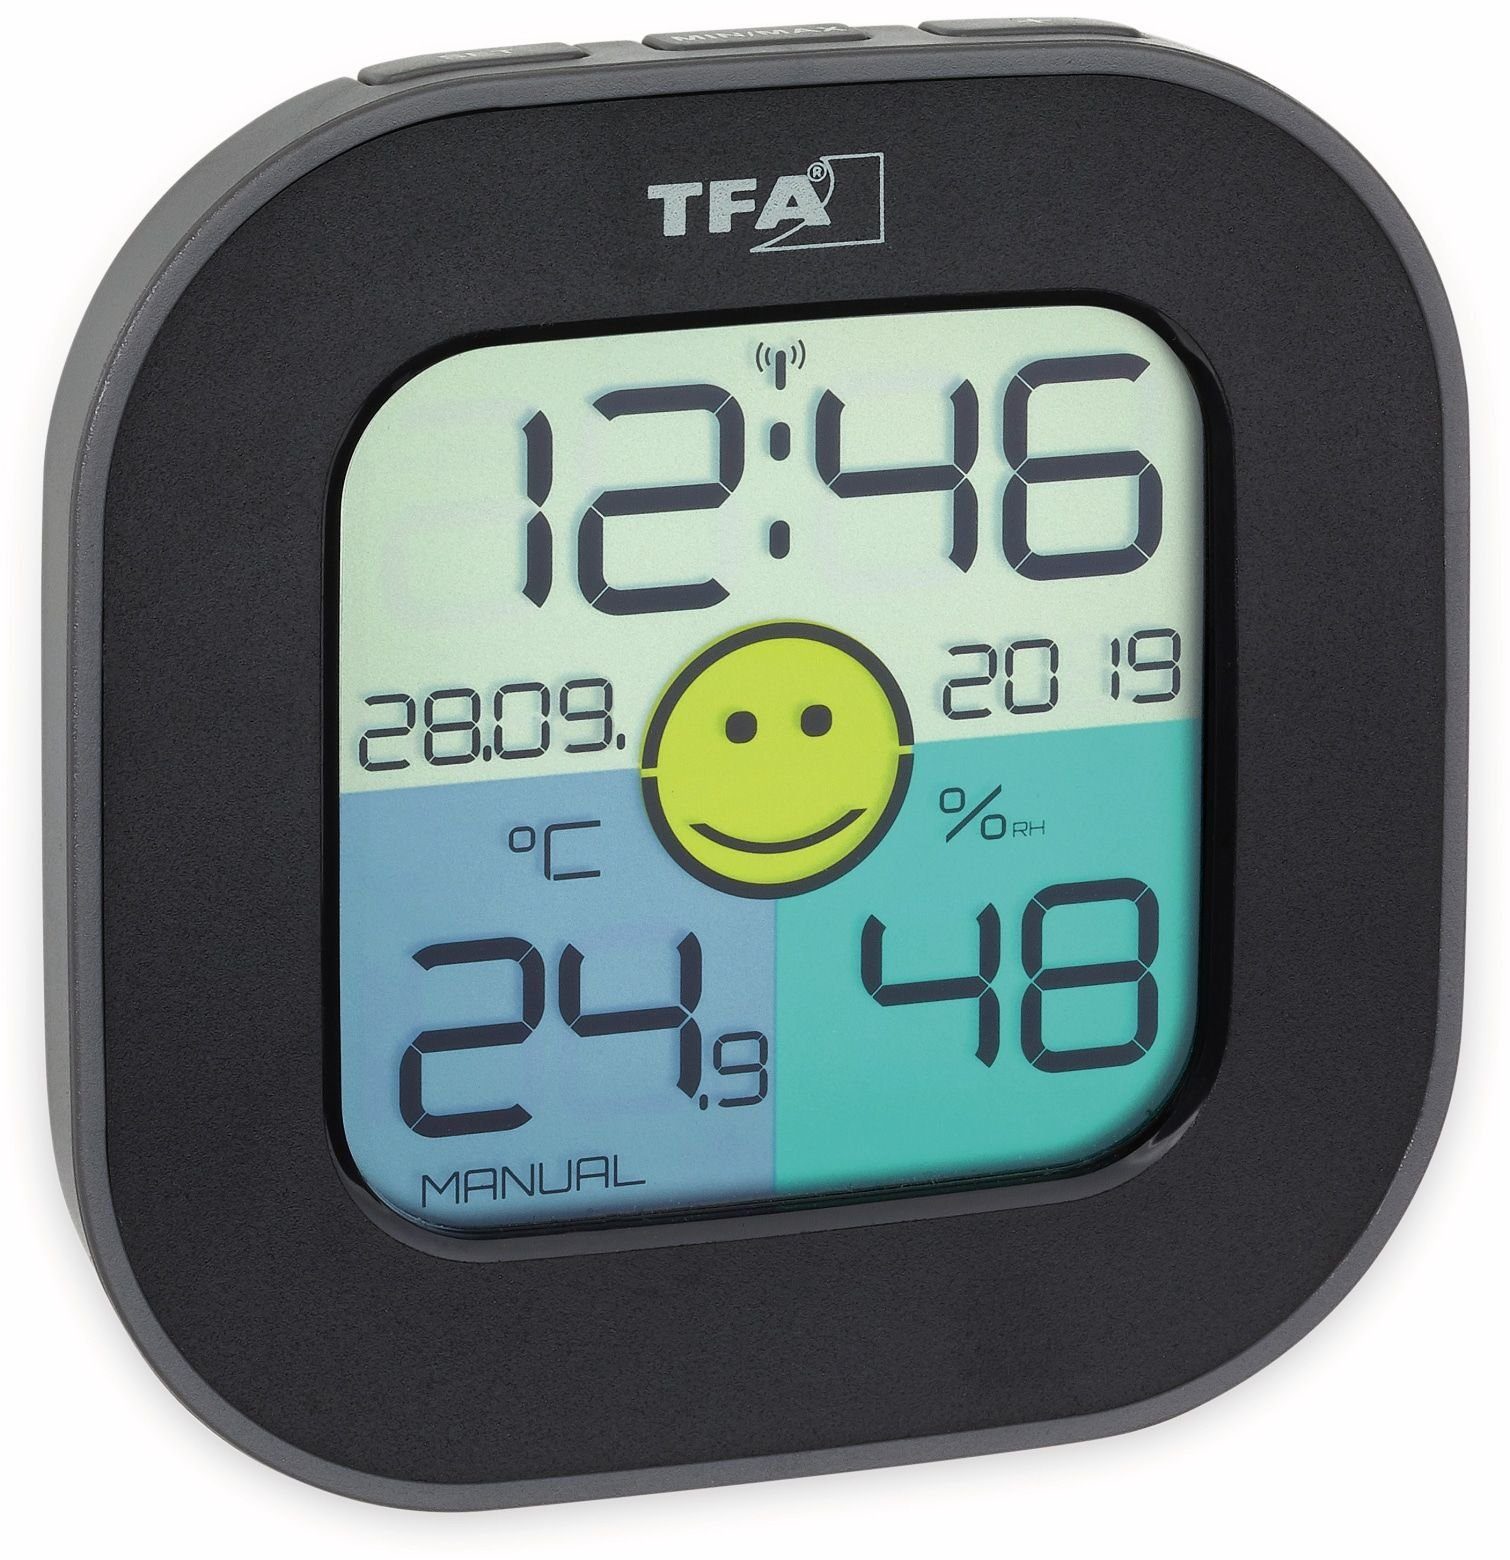 TFA Dostmann Tfa Badethermometer TFA Digitales Thermo-Hygrometer Fun, 30.5050.01 schwarz